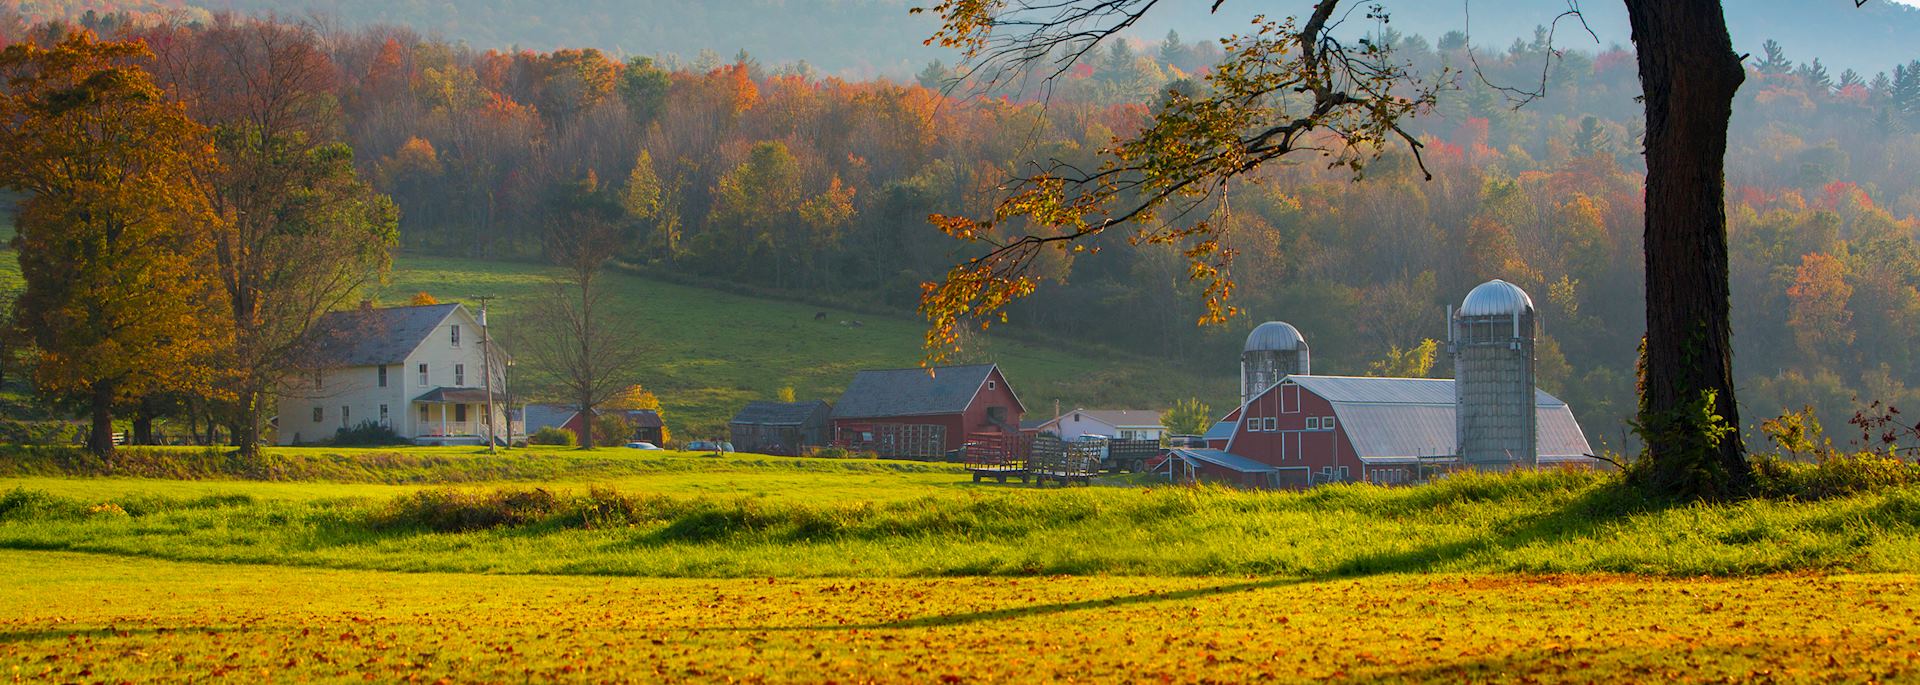 Vermont farmland, New England